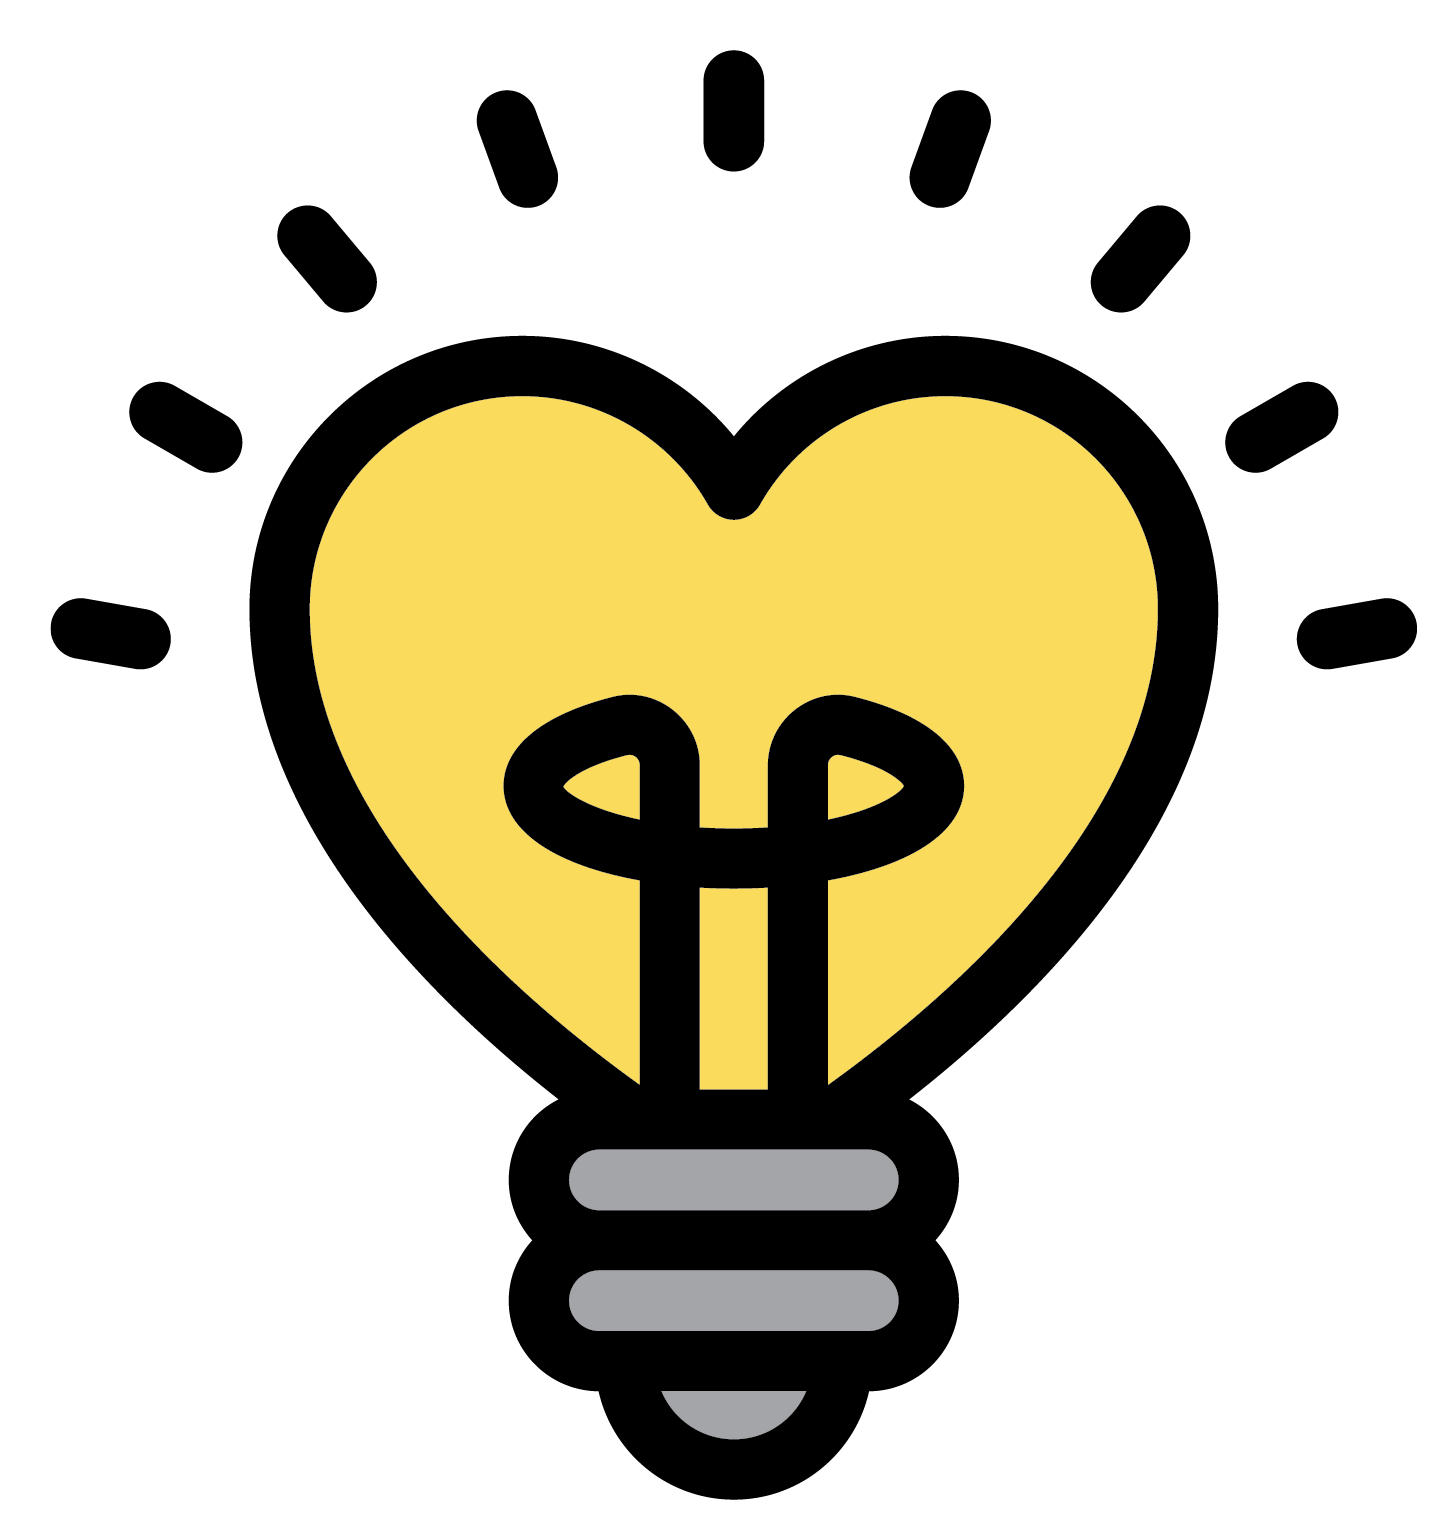 icon of a heart-shaped light bulb